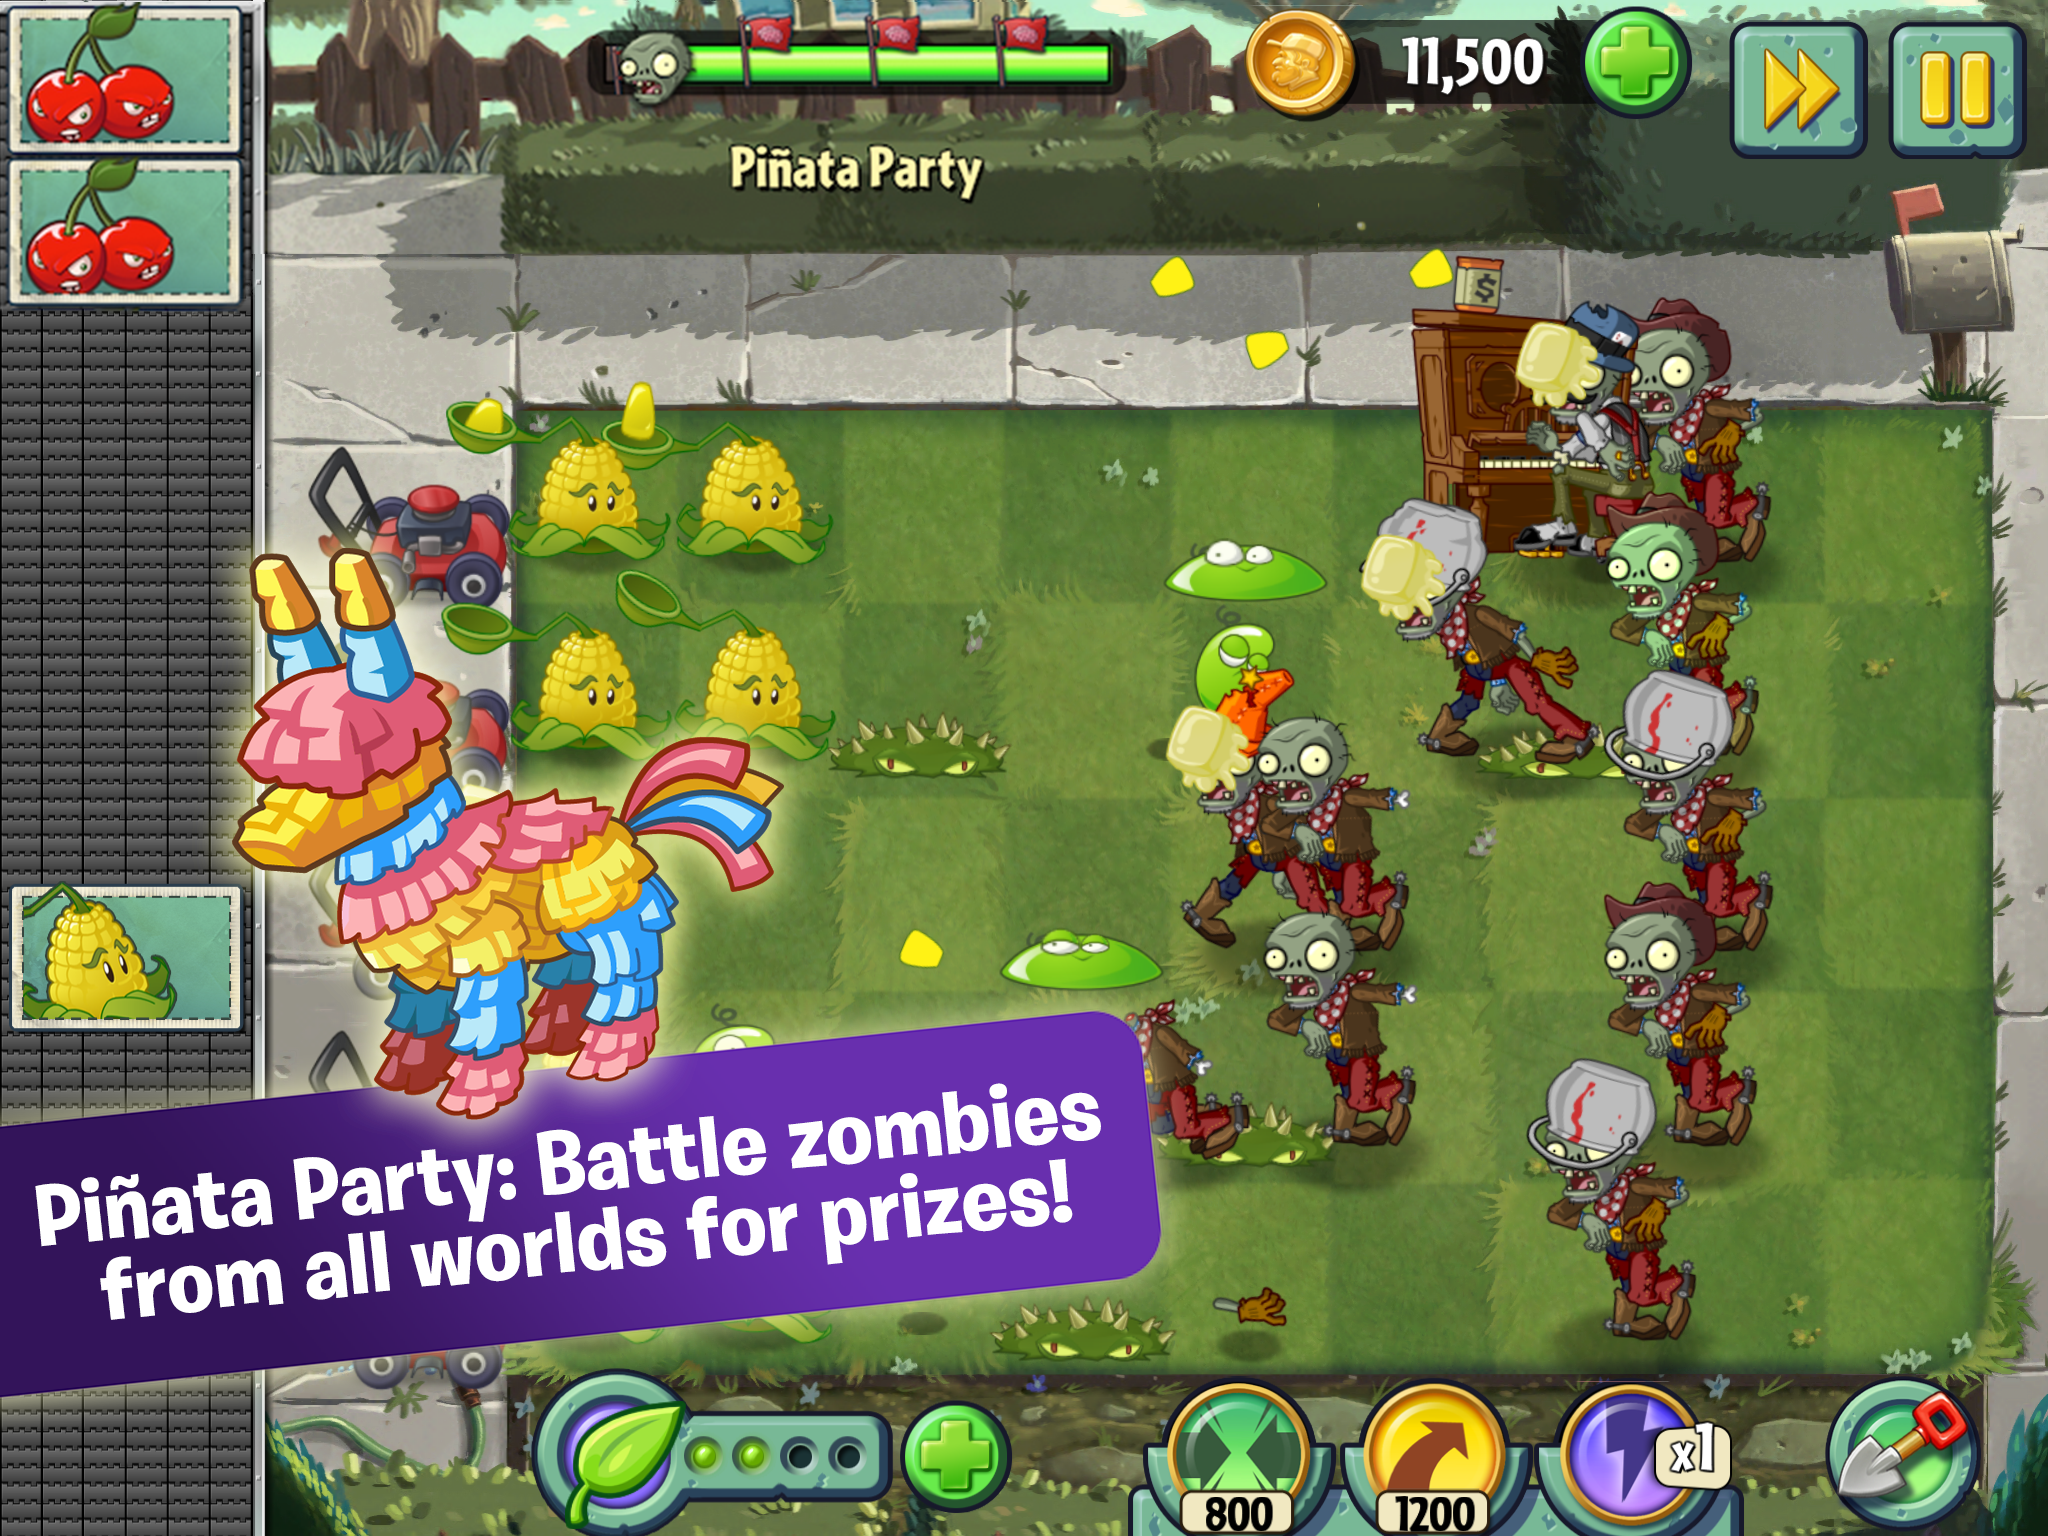 Plants vs. Zombies 2: It's About Time PopCap Games Wiki, Plants vs